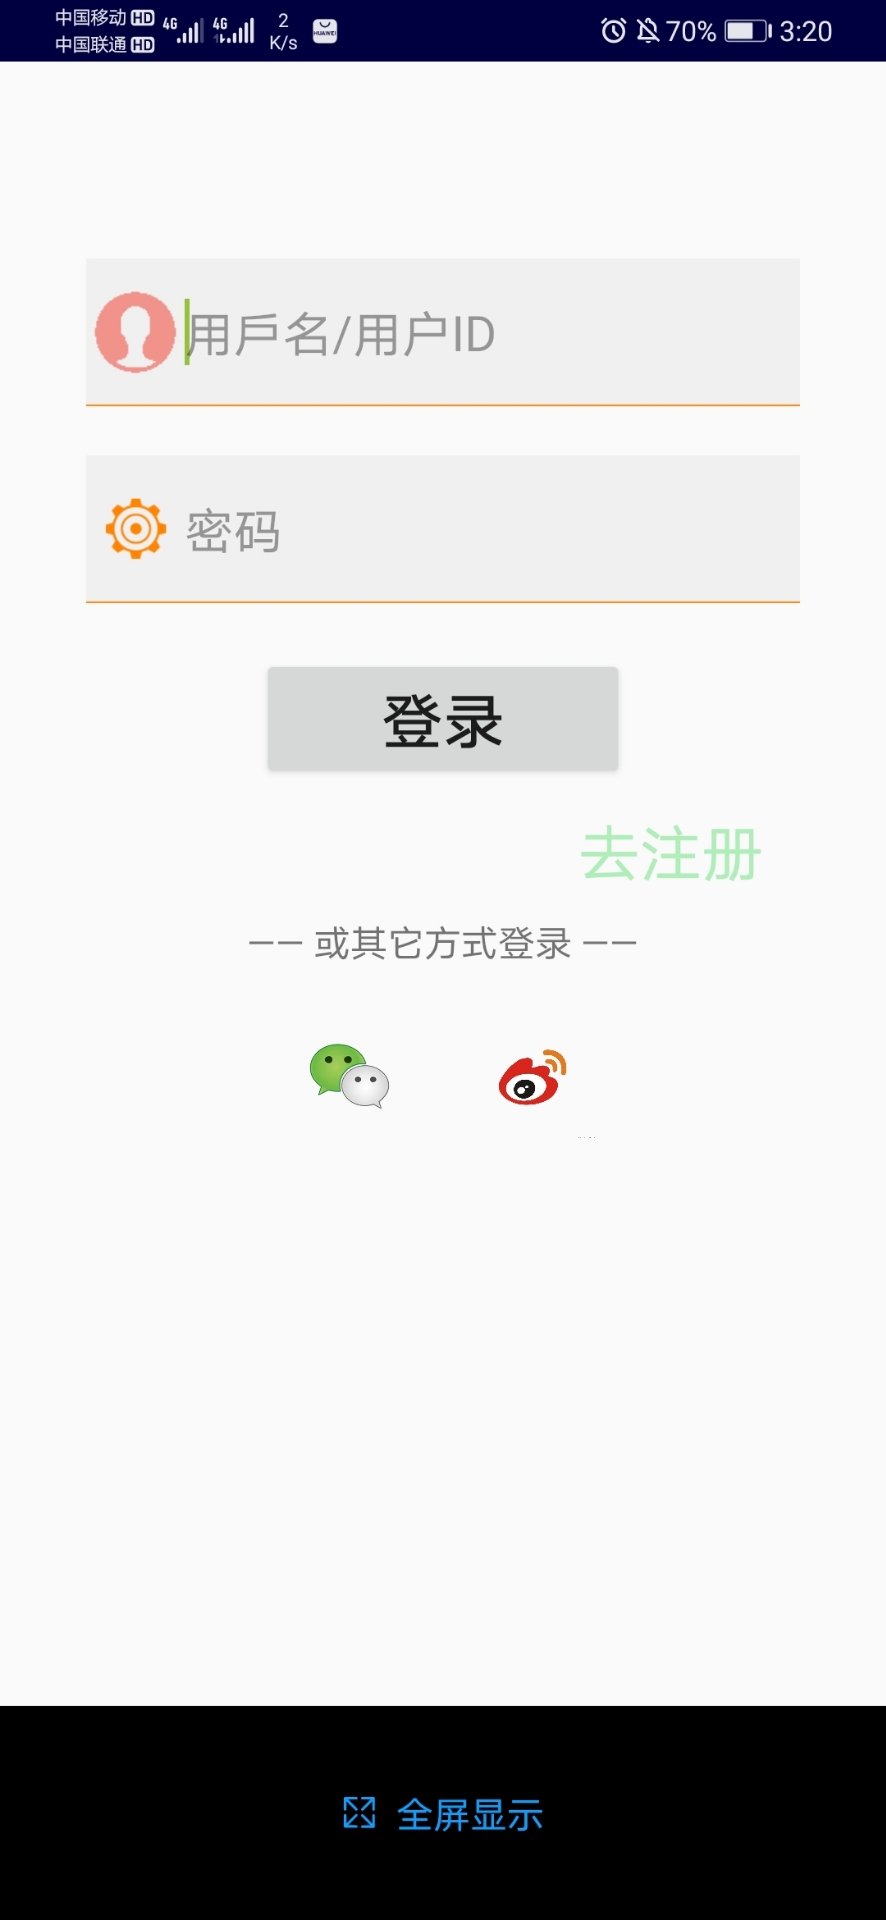 Android studio成品源码项目社区/论坛/交流/发